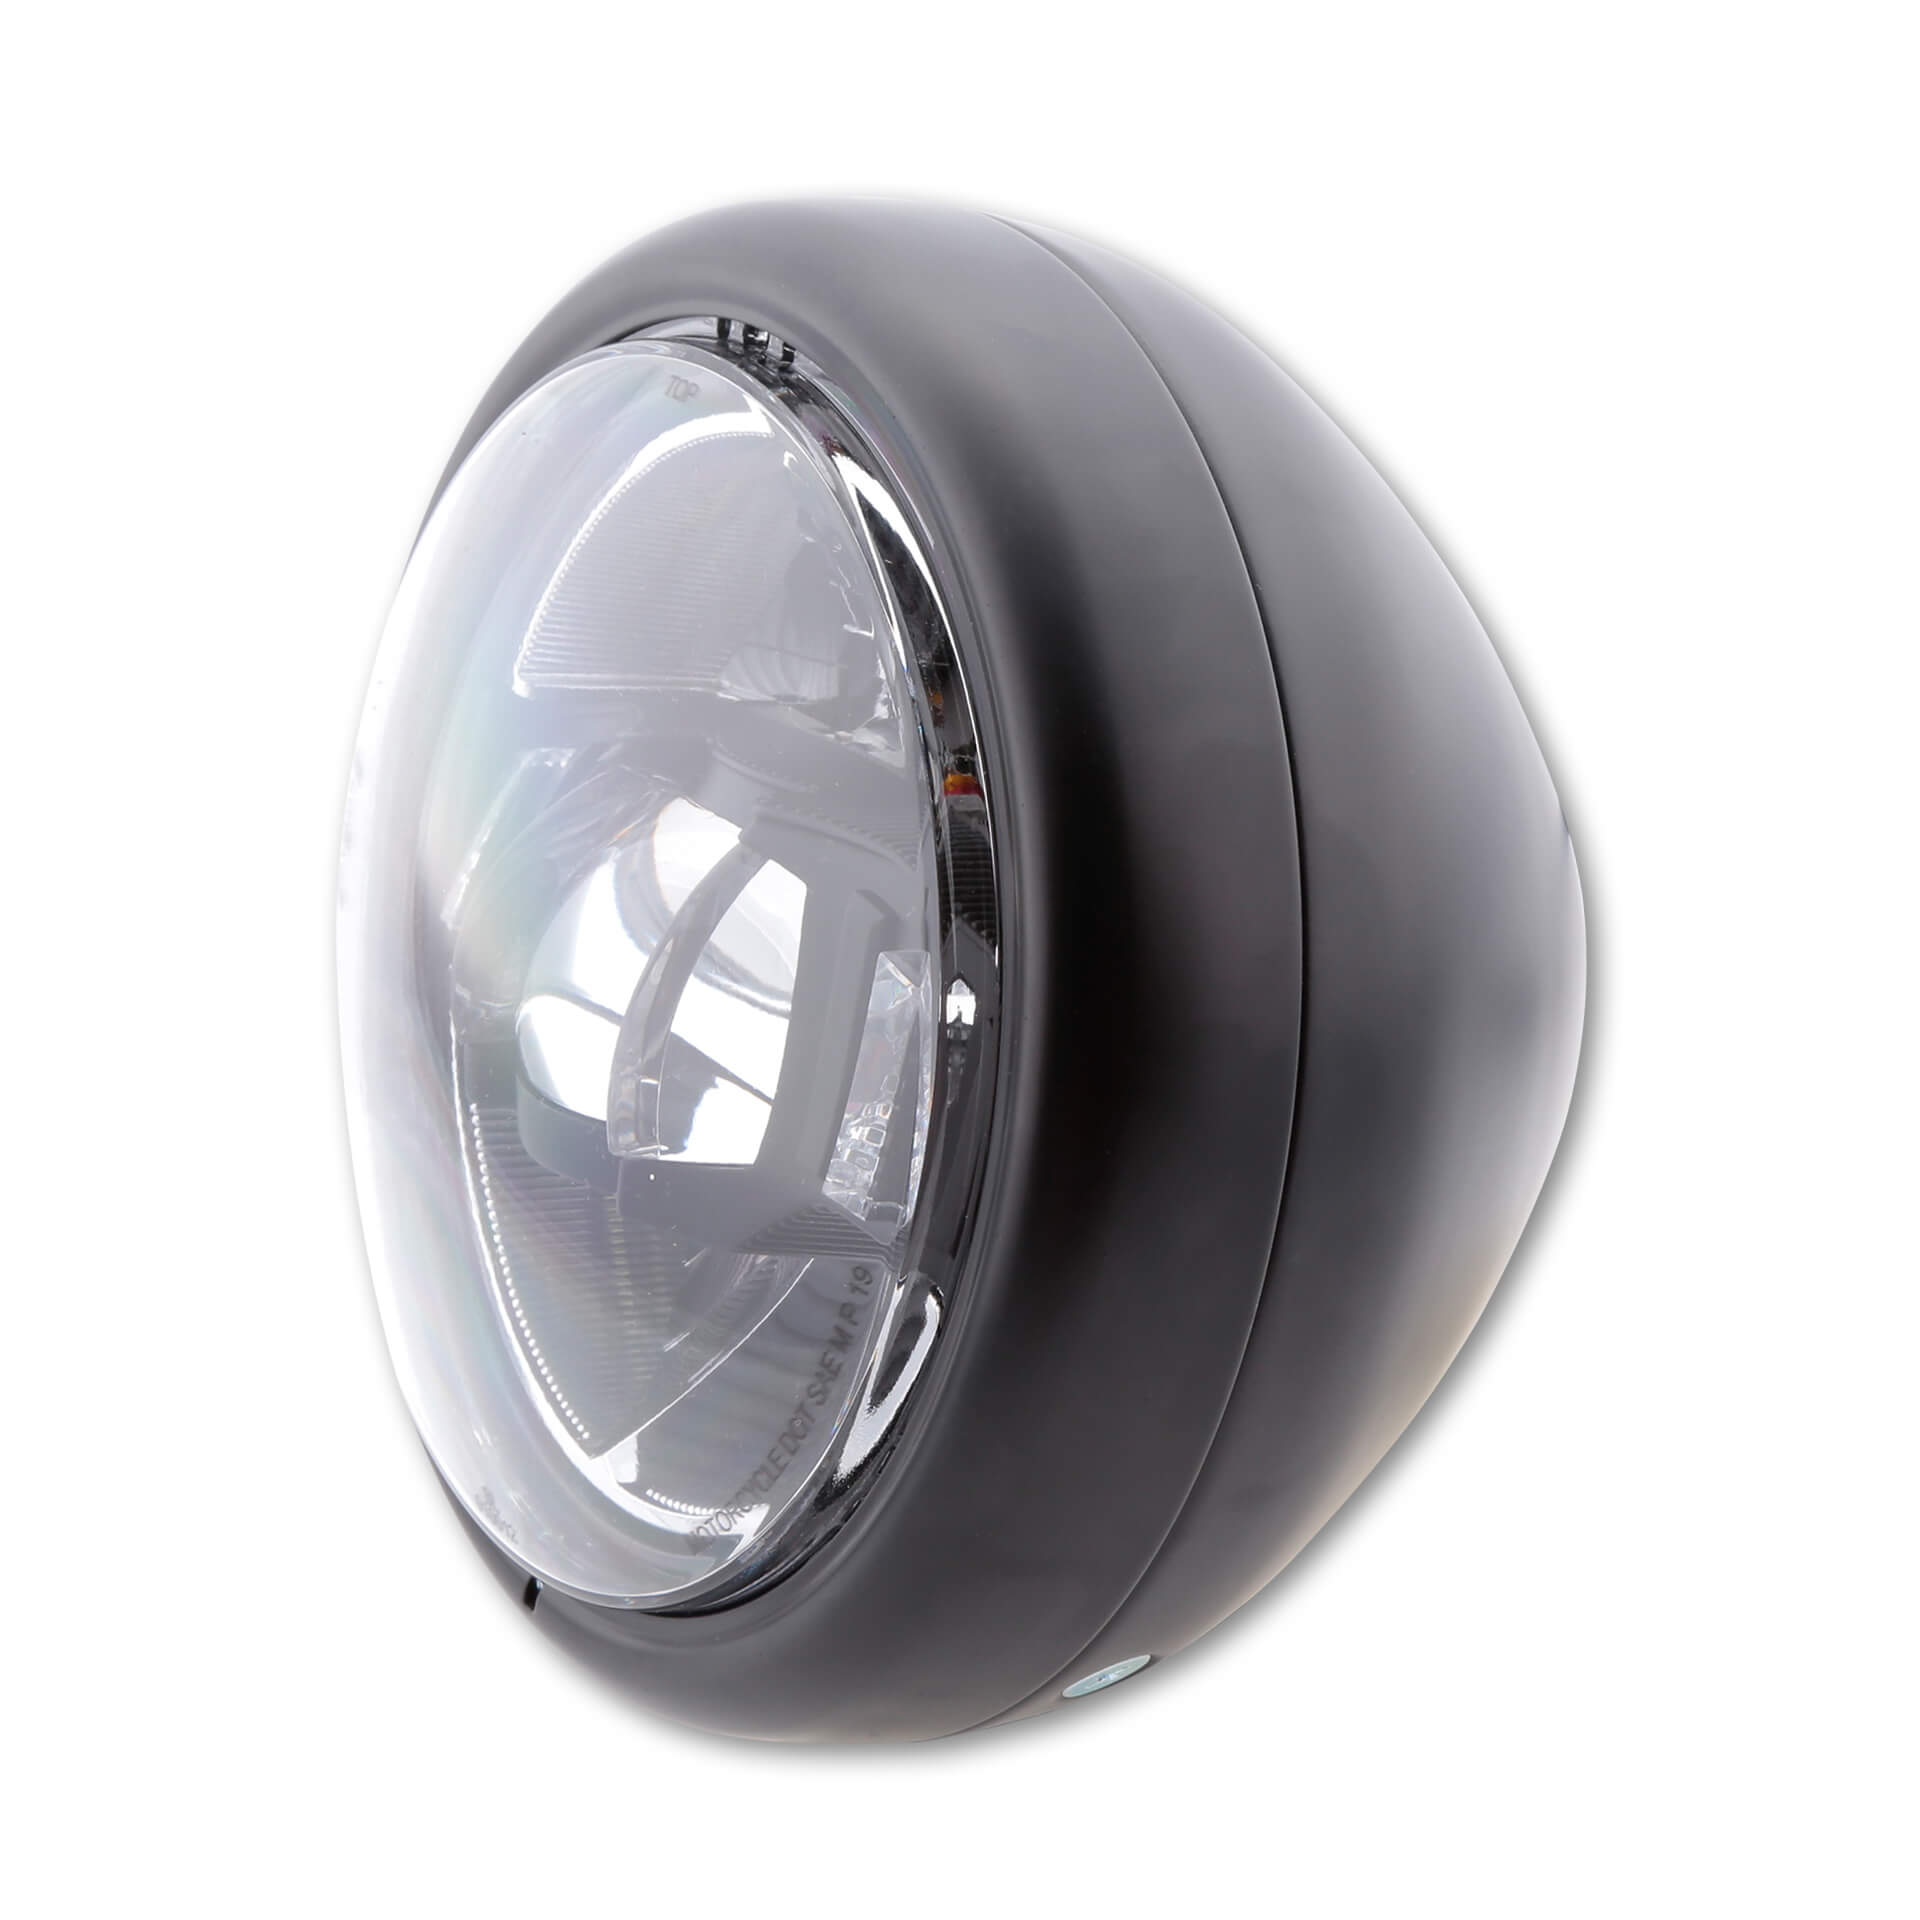 HIGHSIDER PECOS TYPE 10 5 3/4 inch LED spotlight, black, black